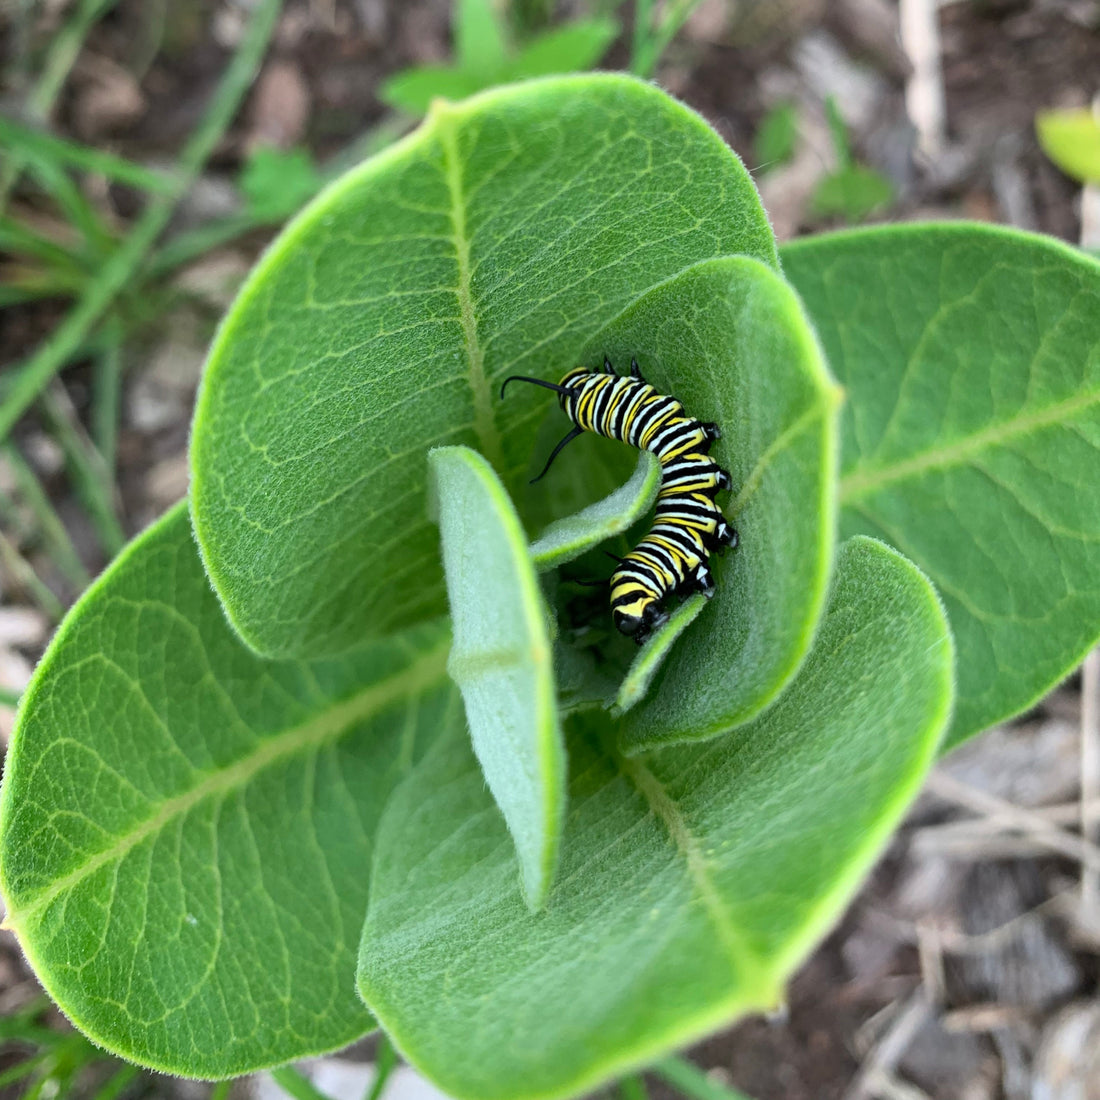 caterpillar tucked in green plant